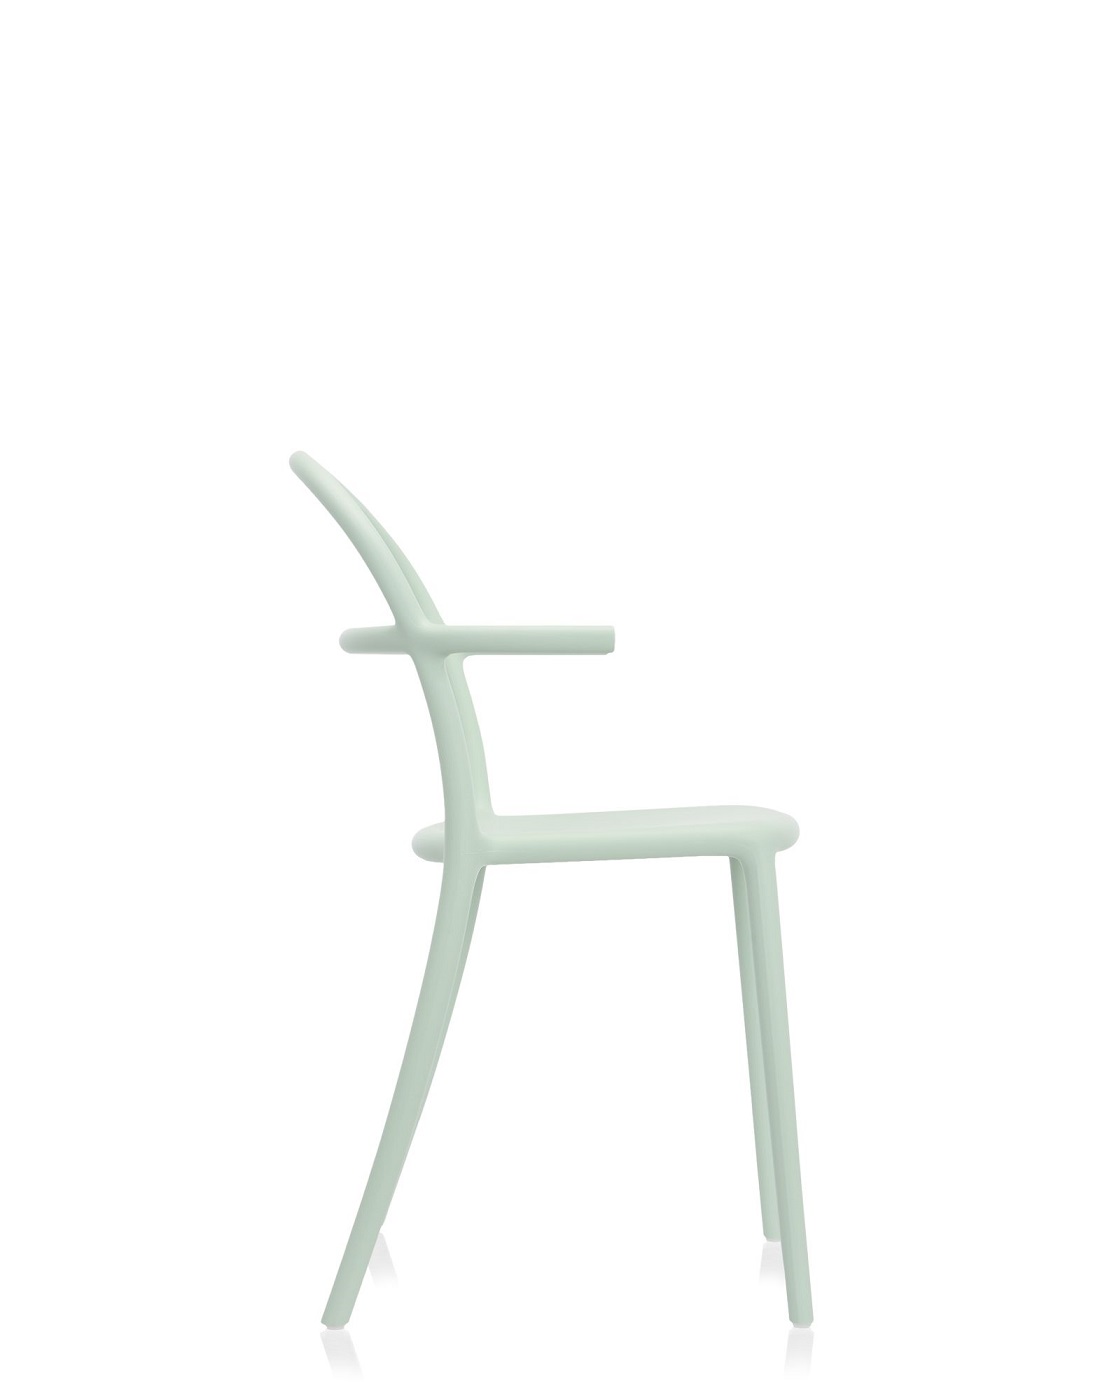 chair-generic-c-sage-green-philippe-starck-kartell-side